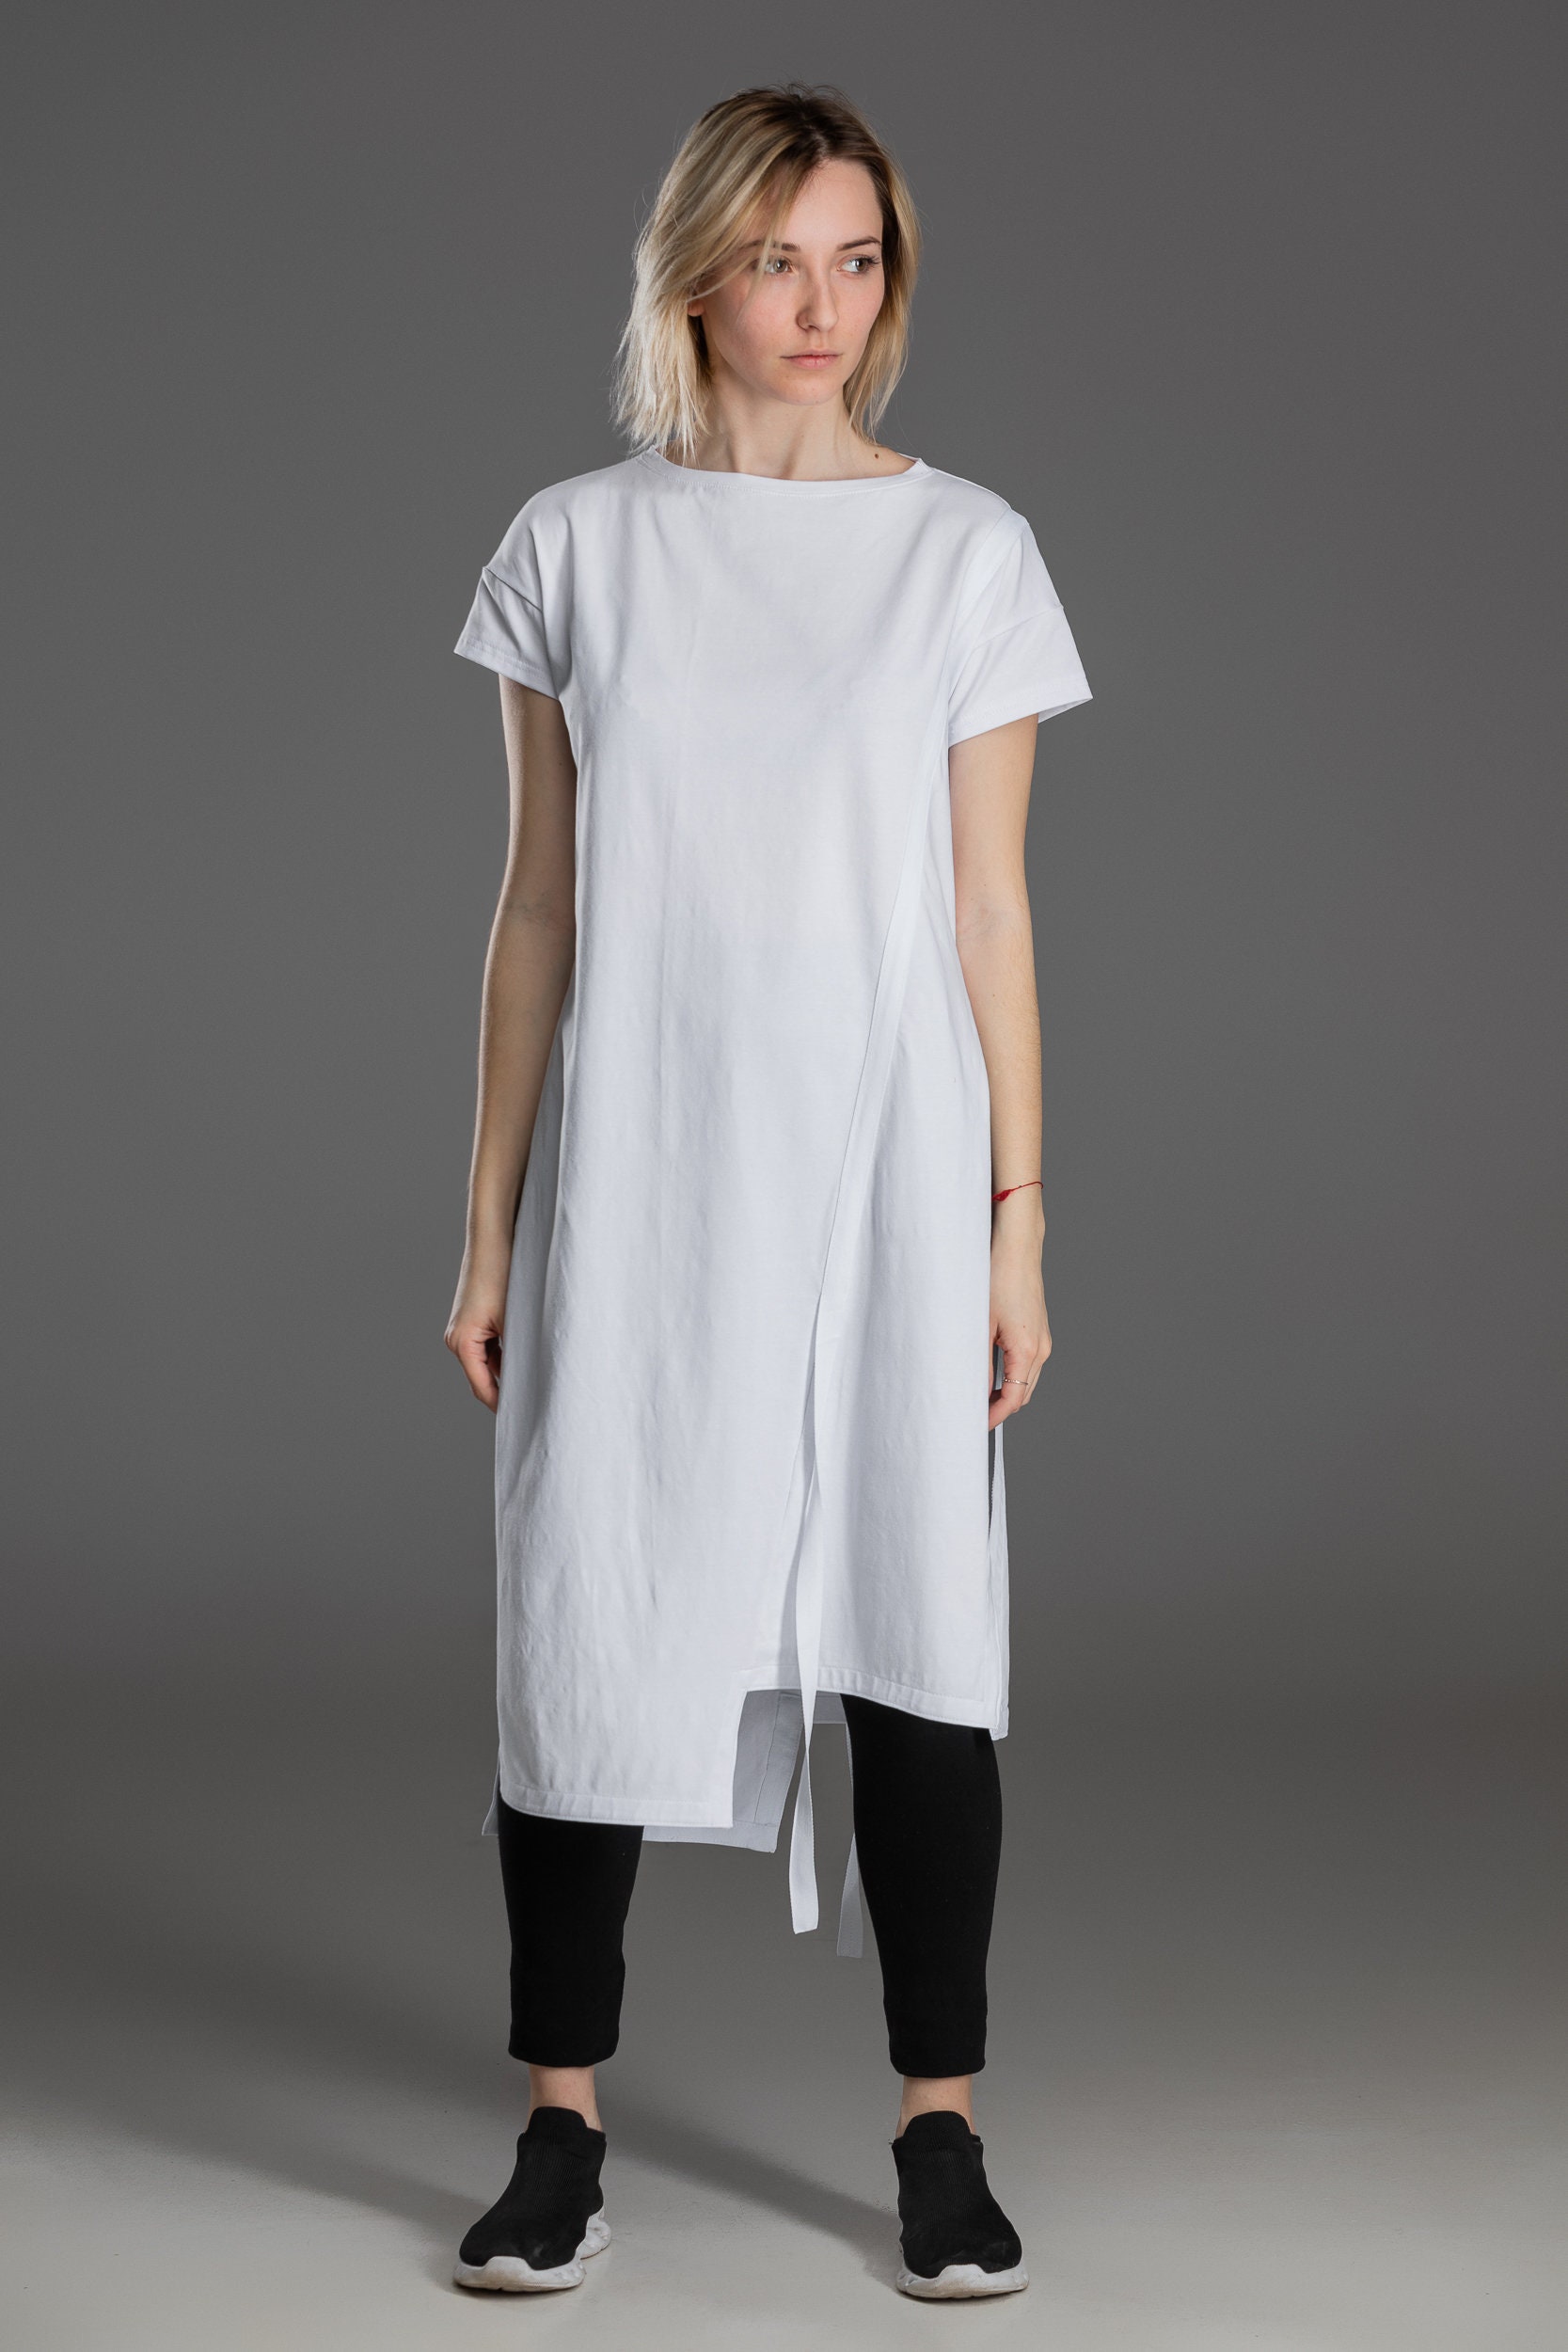 Short sleeve cotton tunic white asymmetric women shirt dress | Etsy